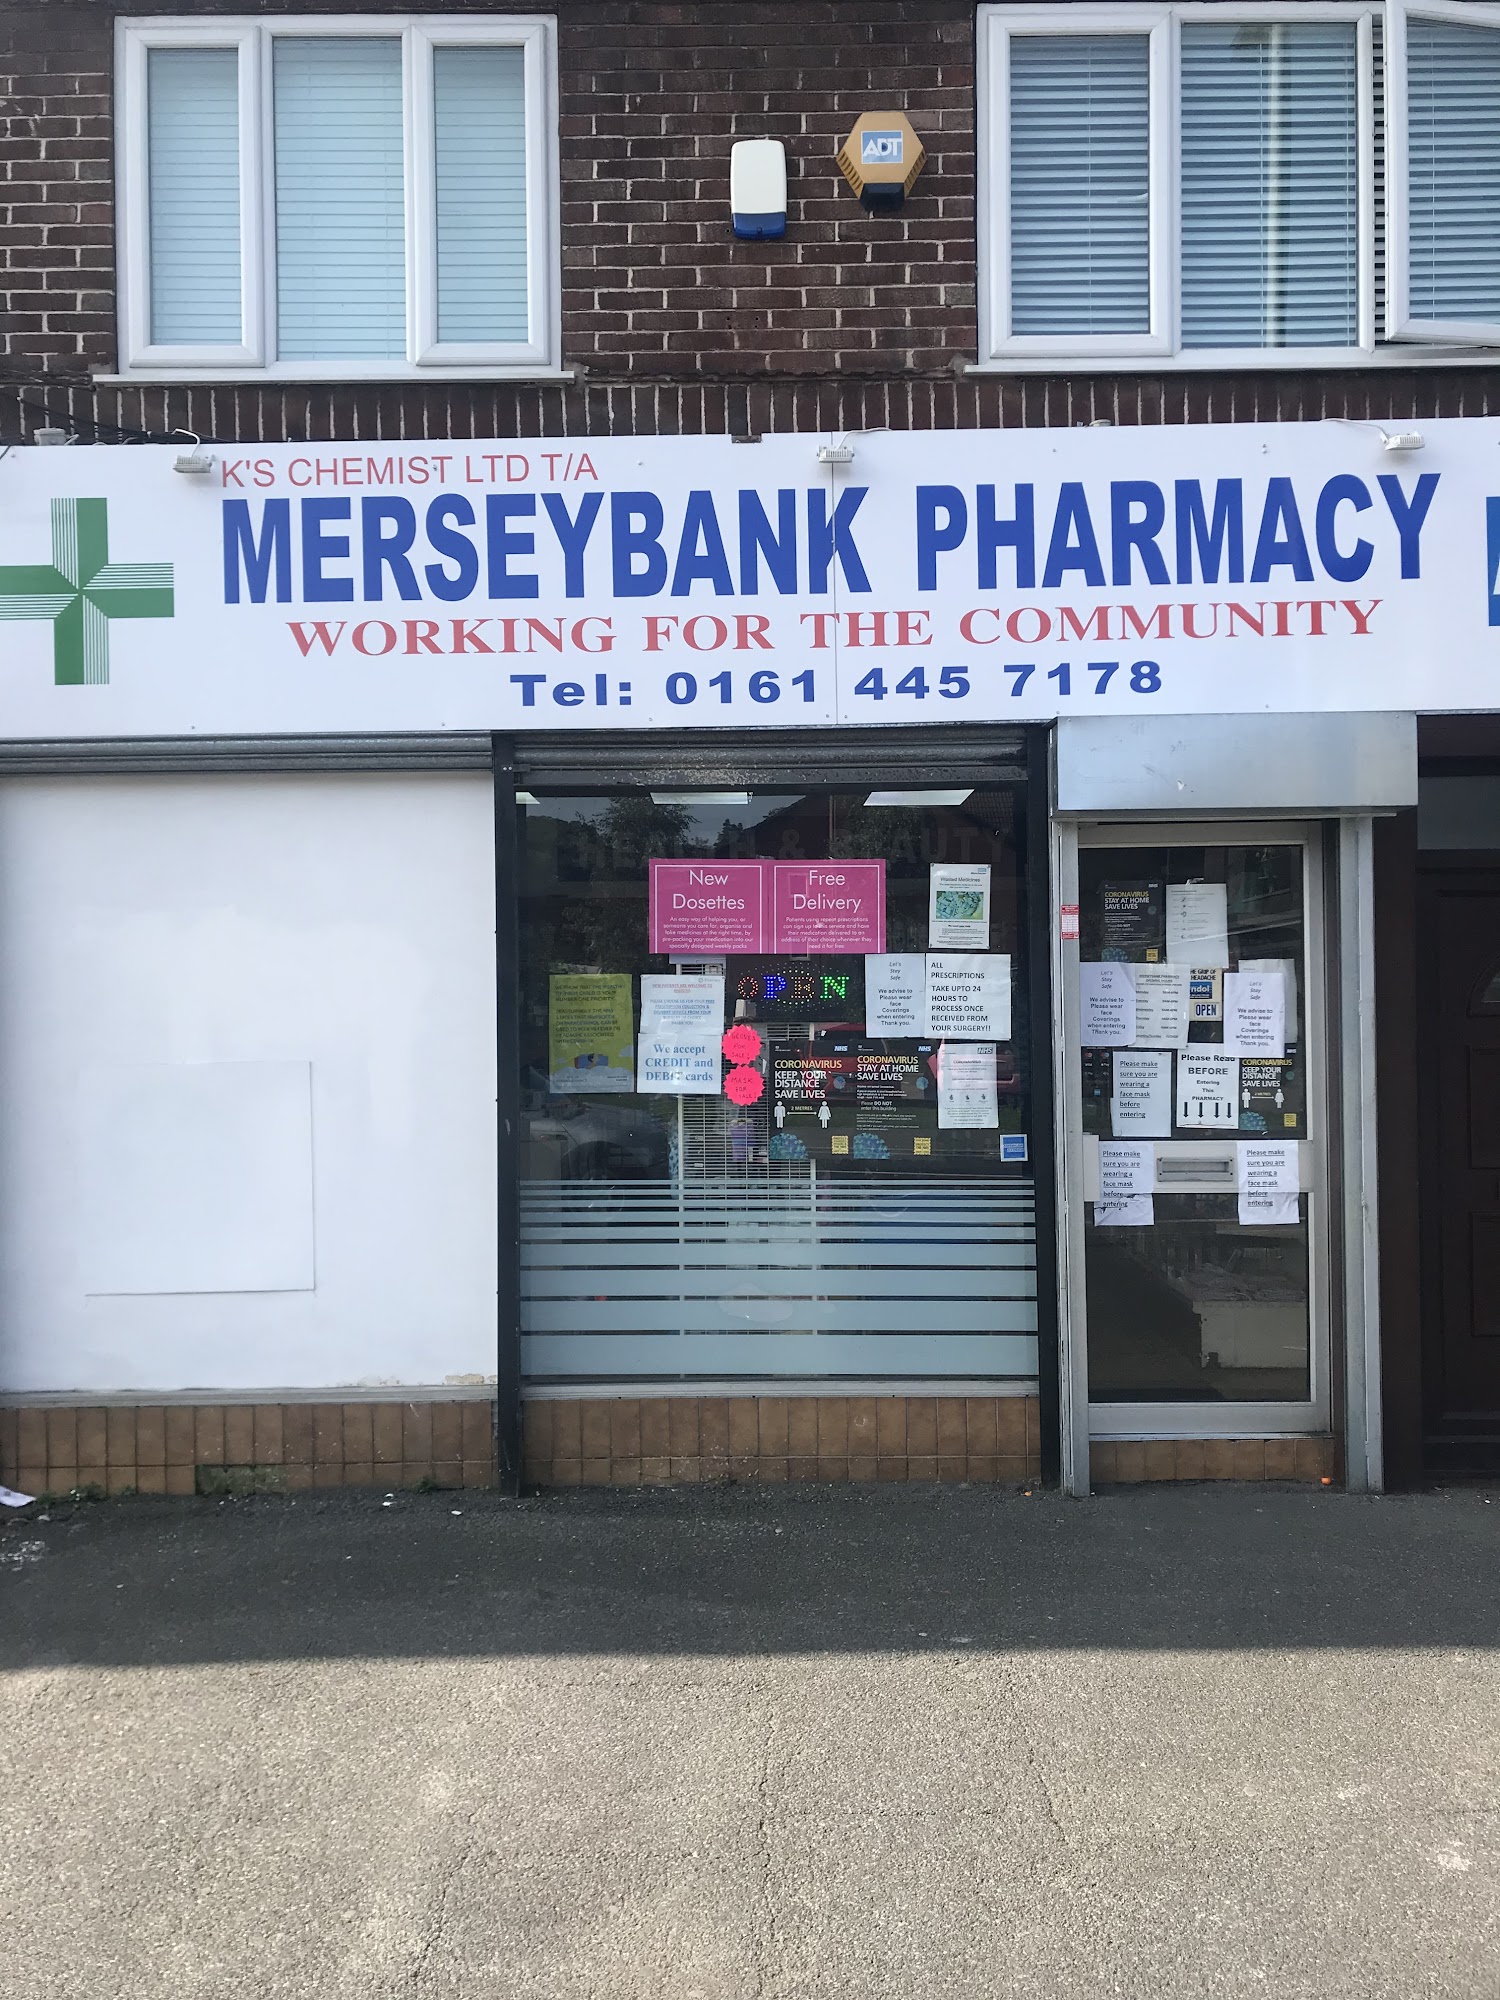 Merseybank Pharmacy